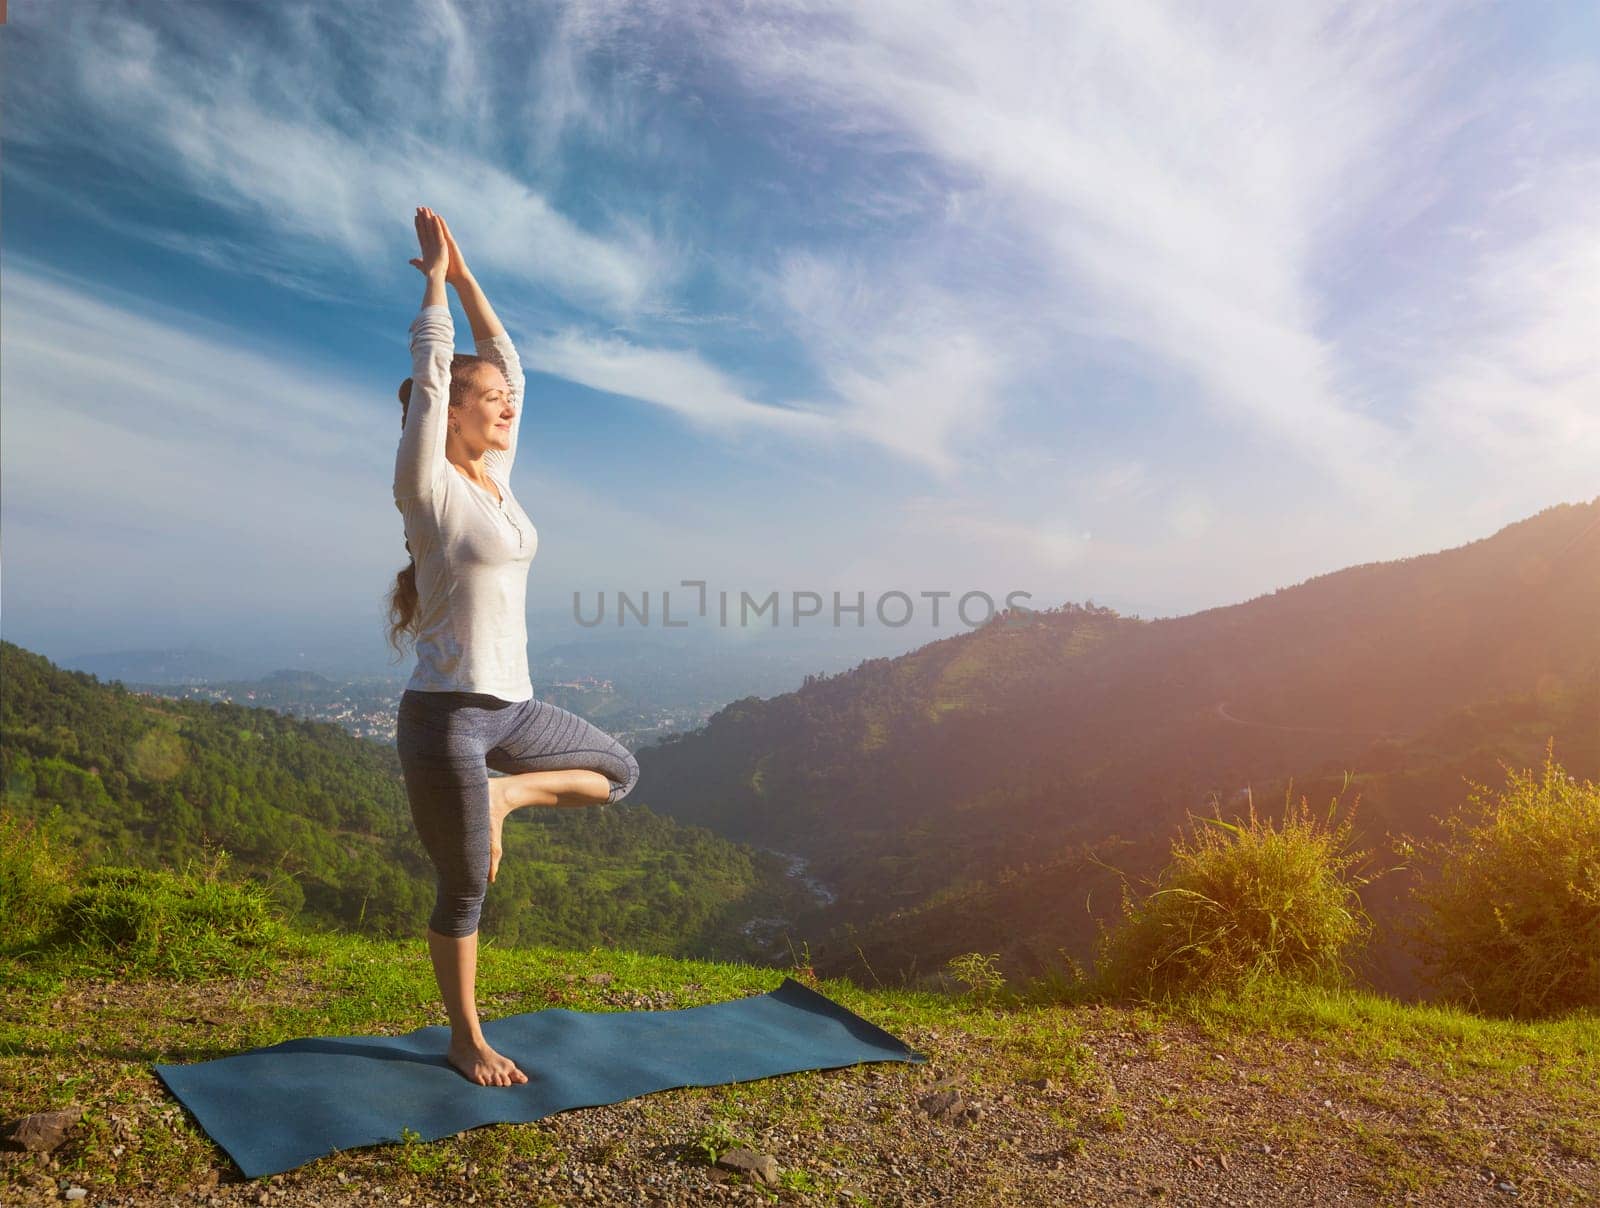 Yoga practice outdoors - woman practices balance yoga asana Vrikshasana tree pose in Himalayas mountains outdoors in the morning. Himachal Pradesh, India